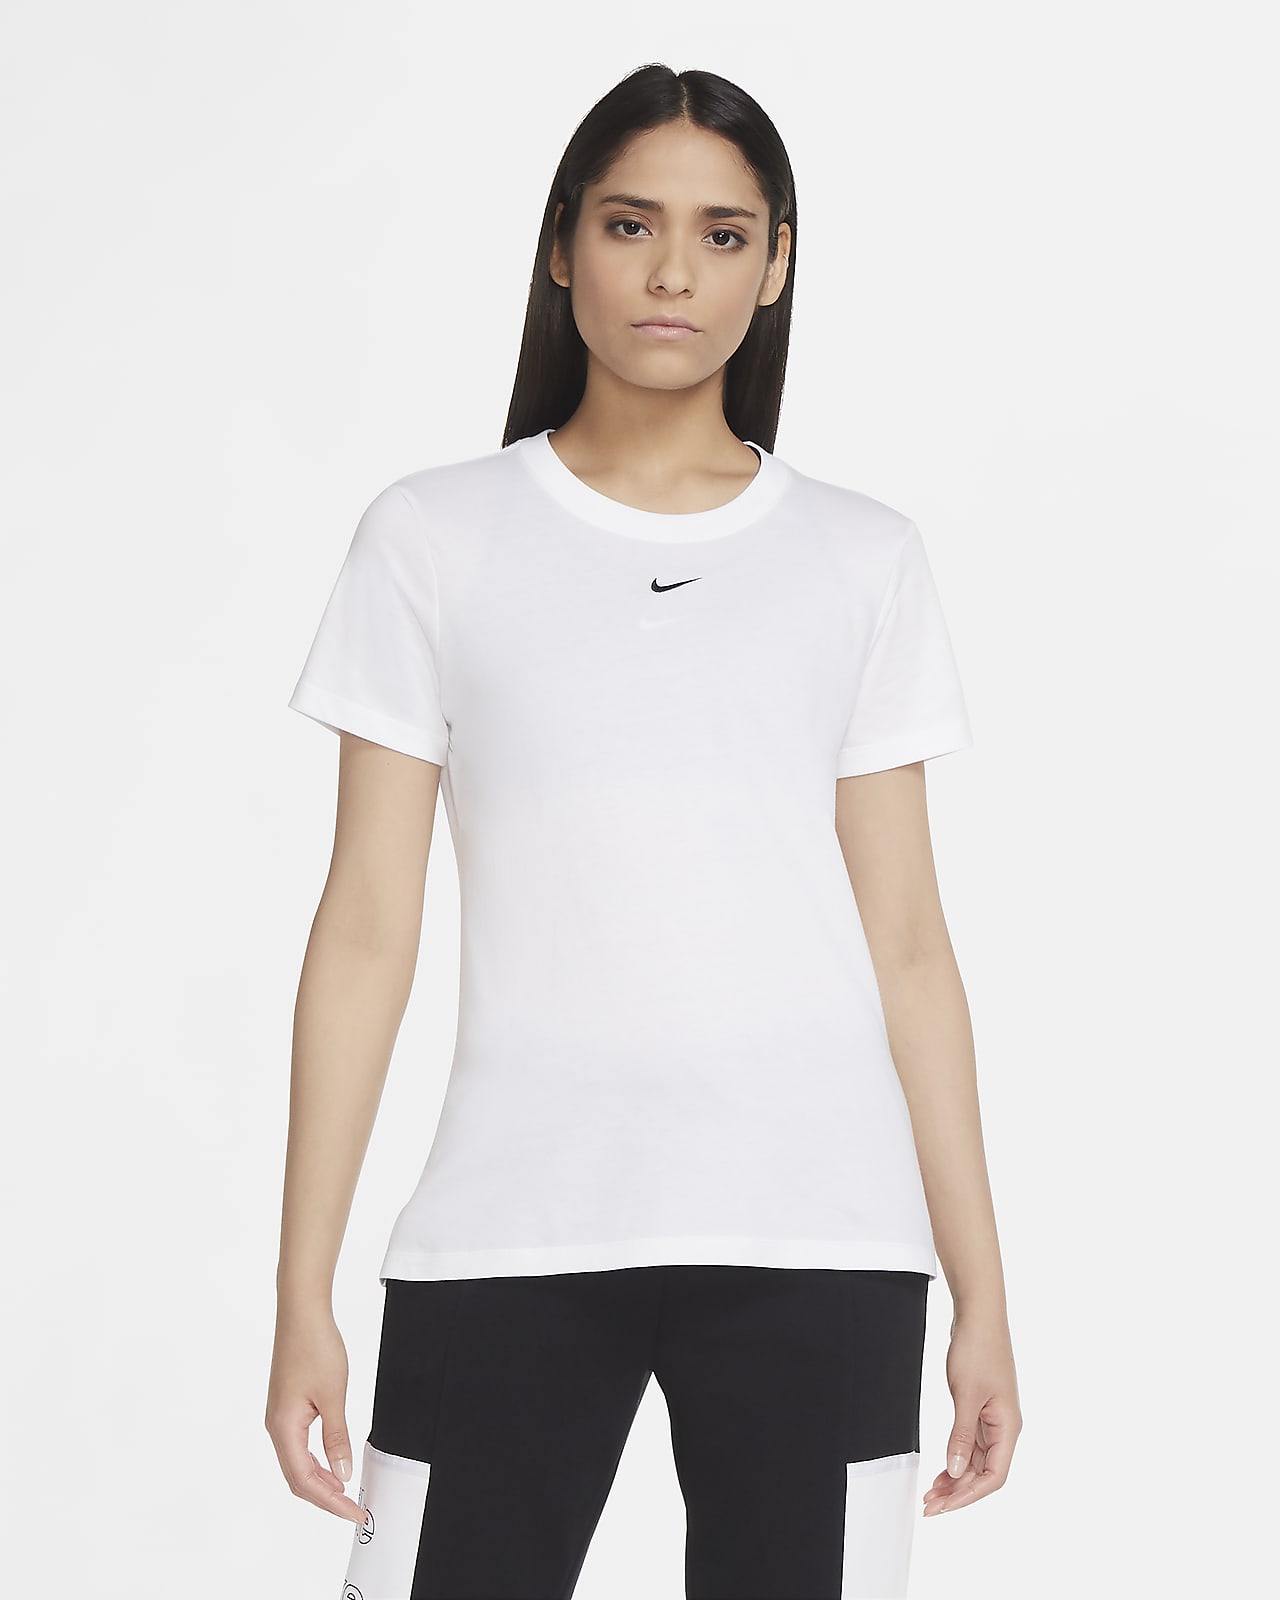 Ster excuus Rijden Nike Sportswear Women's T-Shirt. Nike NL